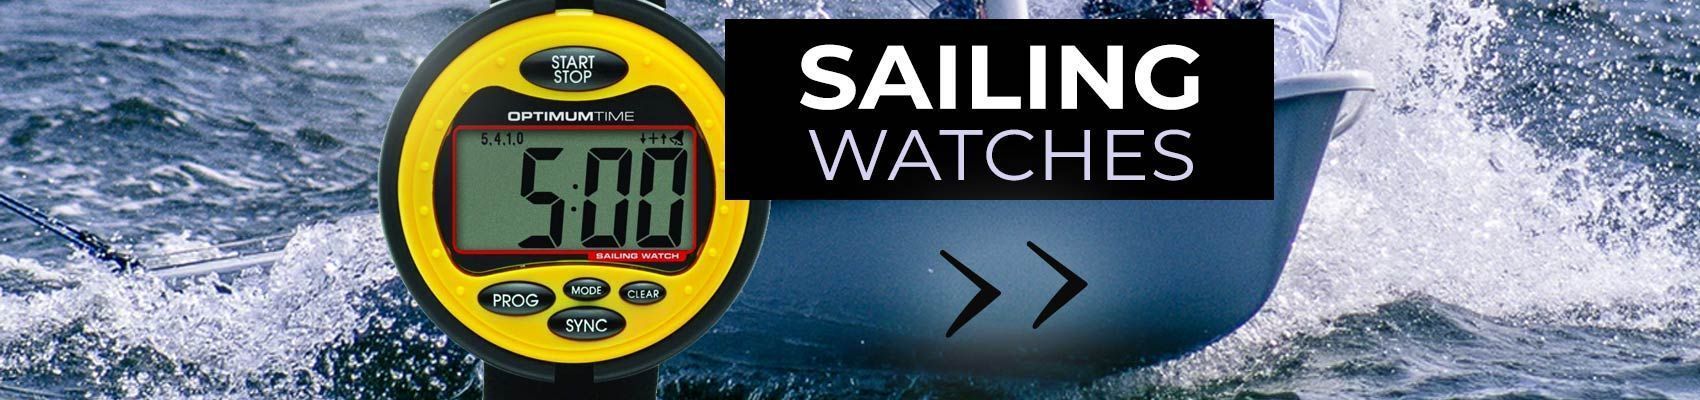 sailing watches 2021